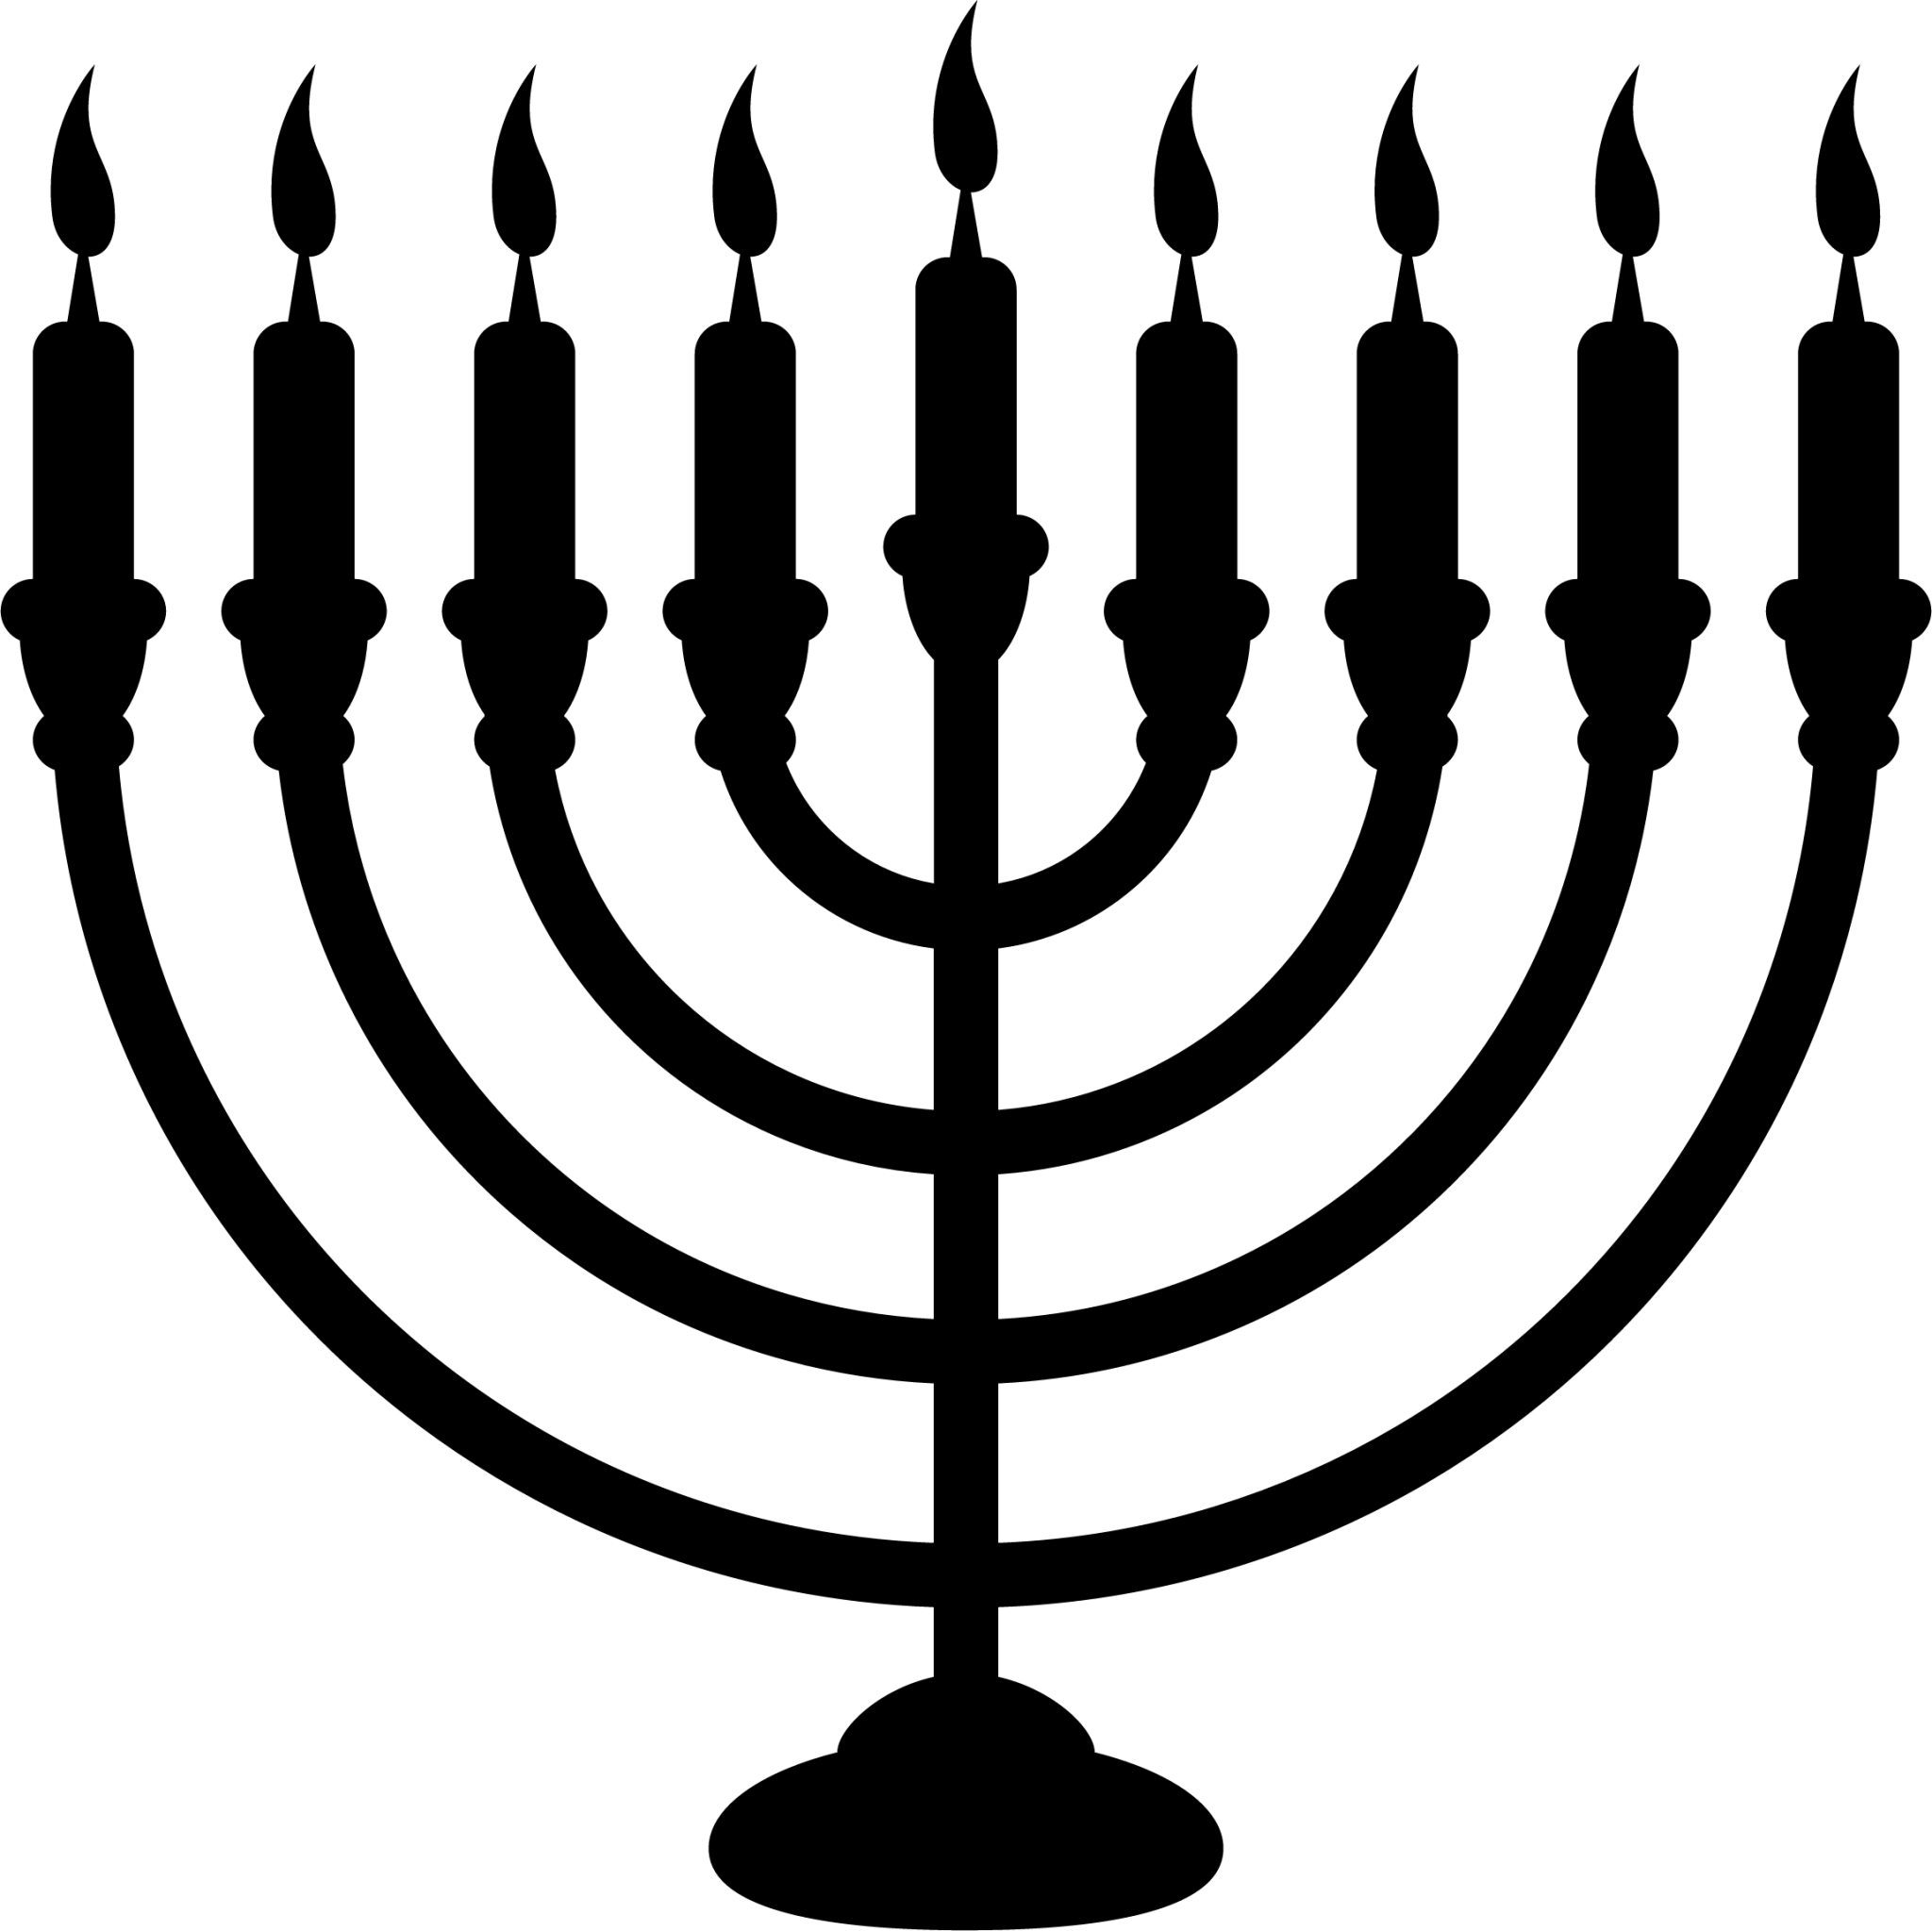 menorah with nine branches emoji